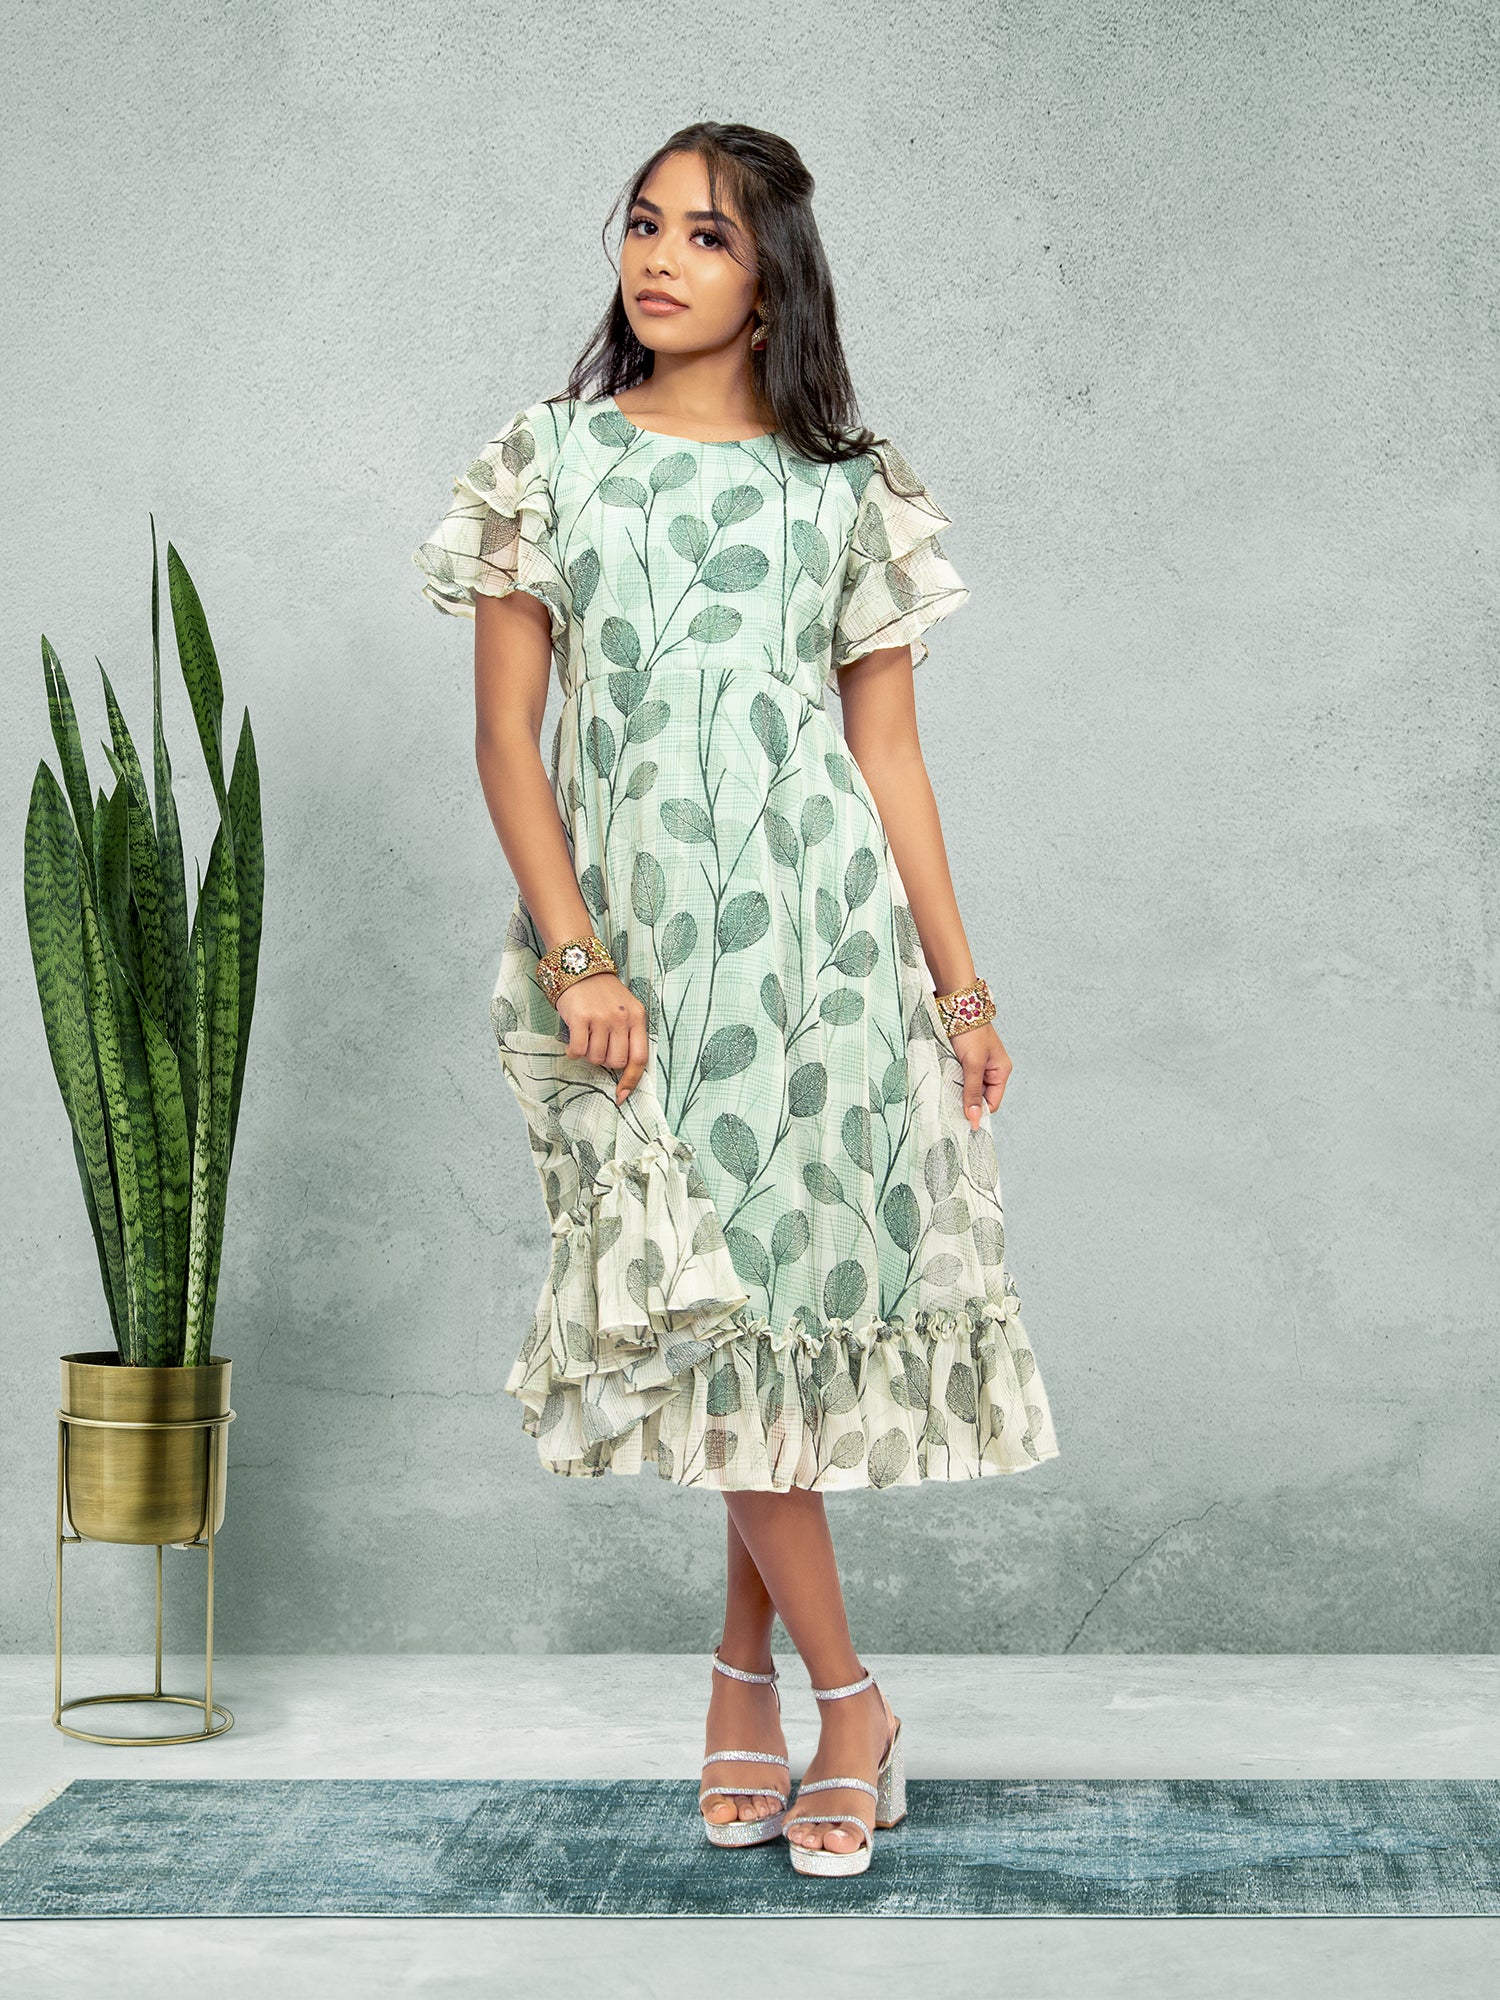 Harmony Hues - Green & White Color Printed Dress